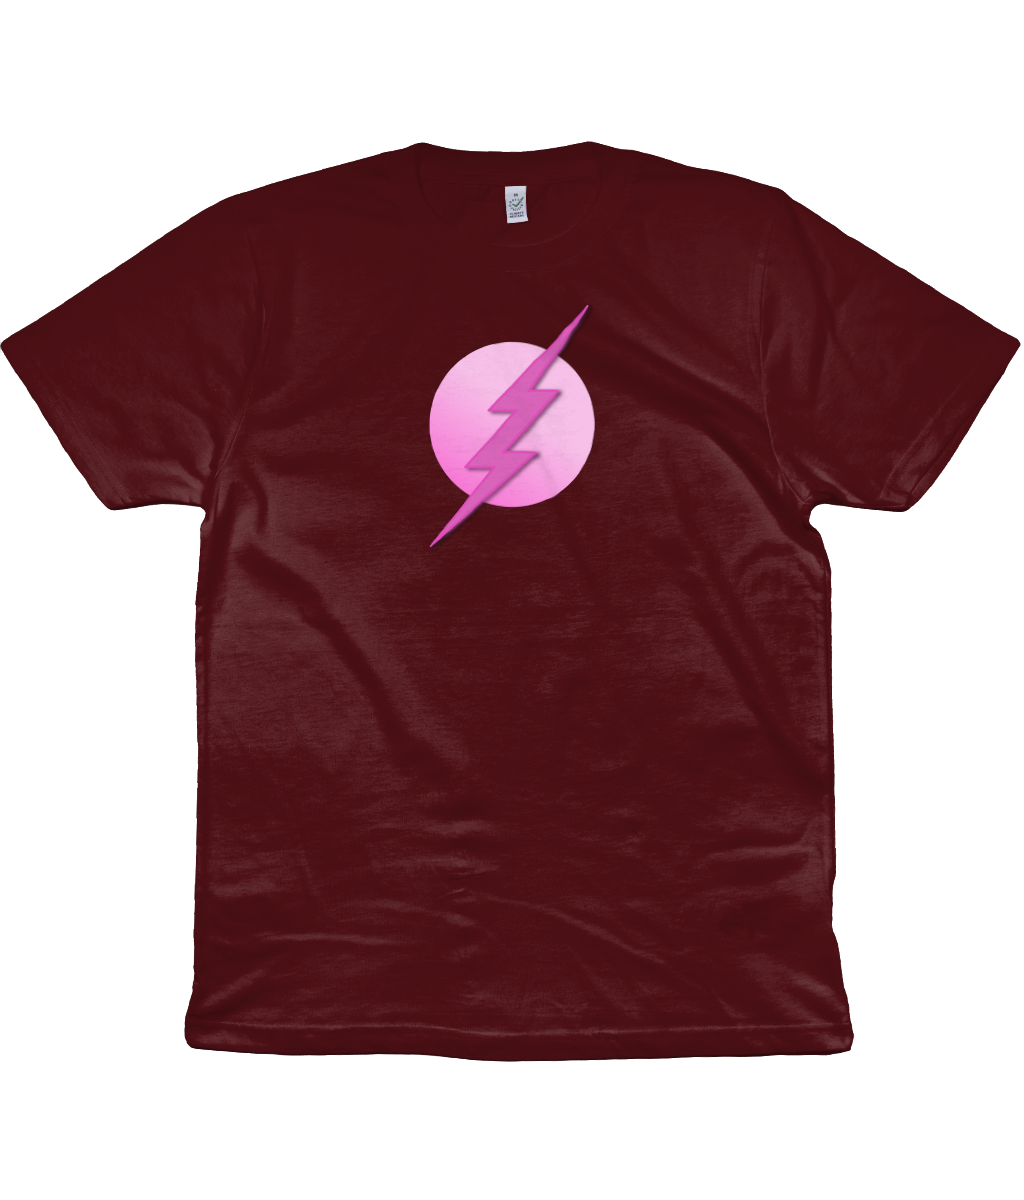 Grey & Pink Superhero Organic Cotton T-Shirt